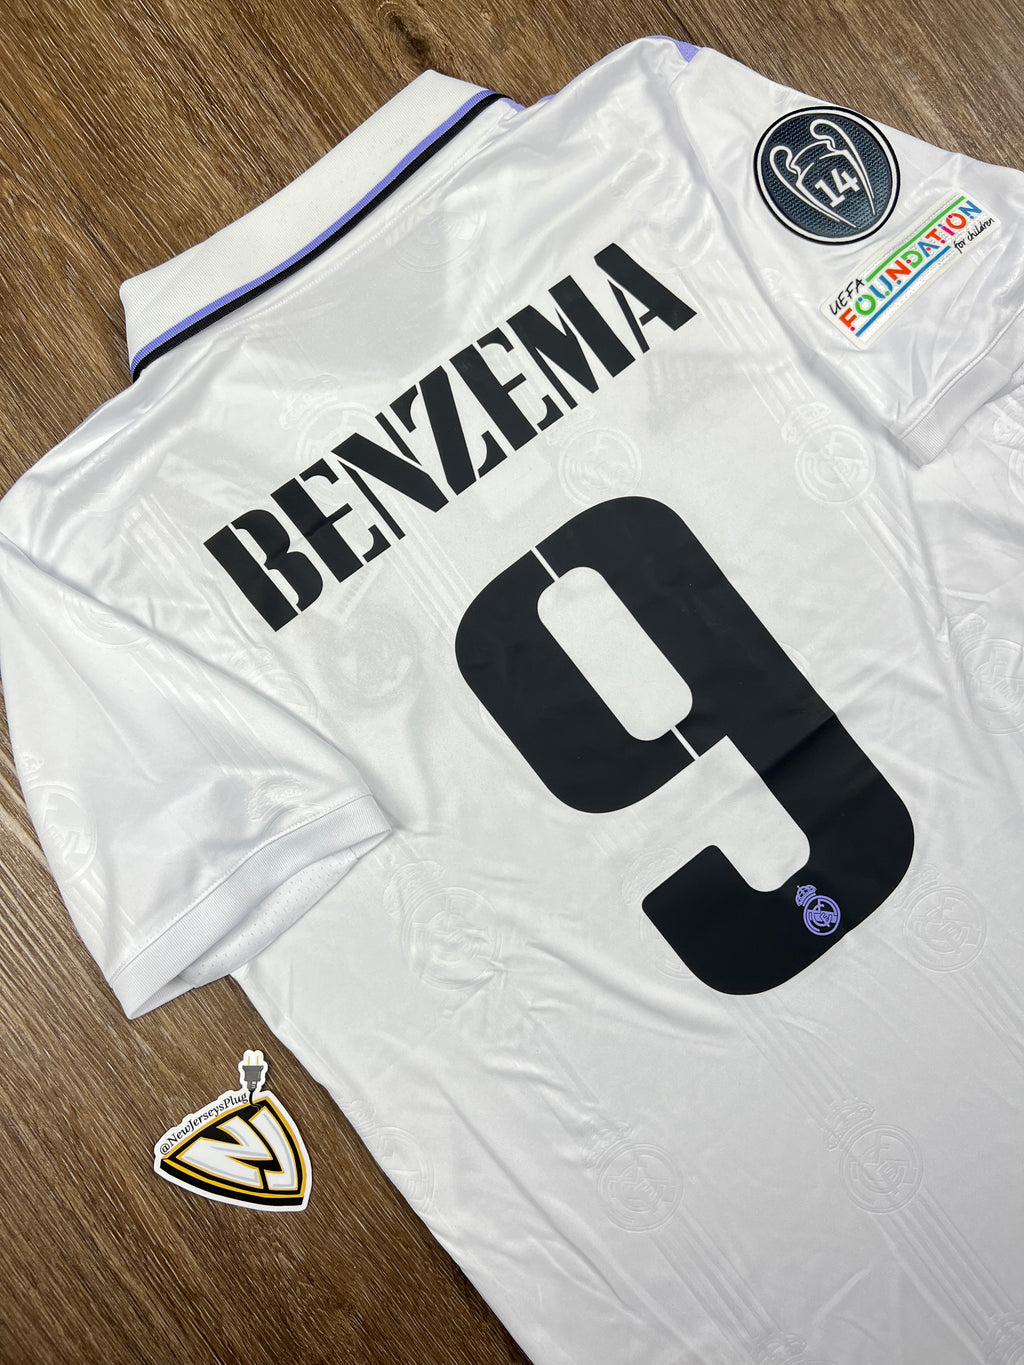 14/15 Barcelona Neymar Jr Home Jersey – NewJerseysPlug